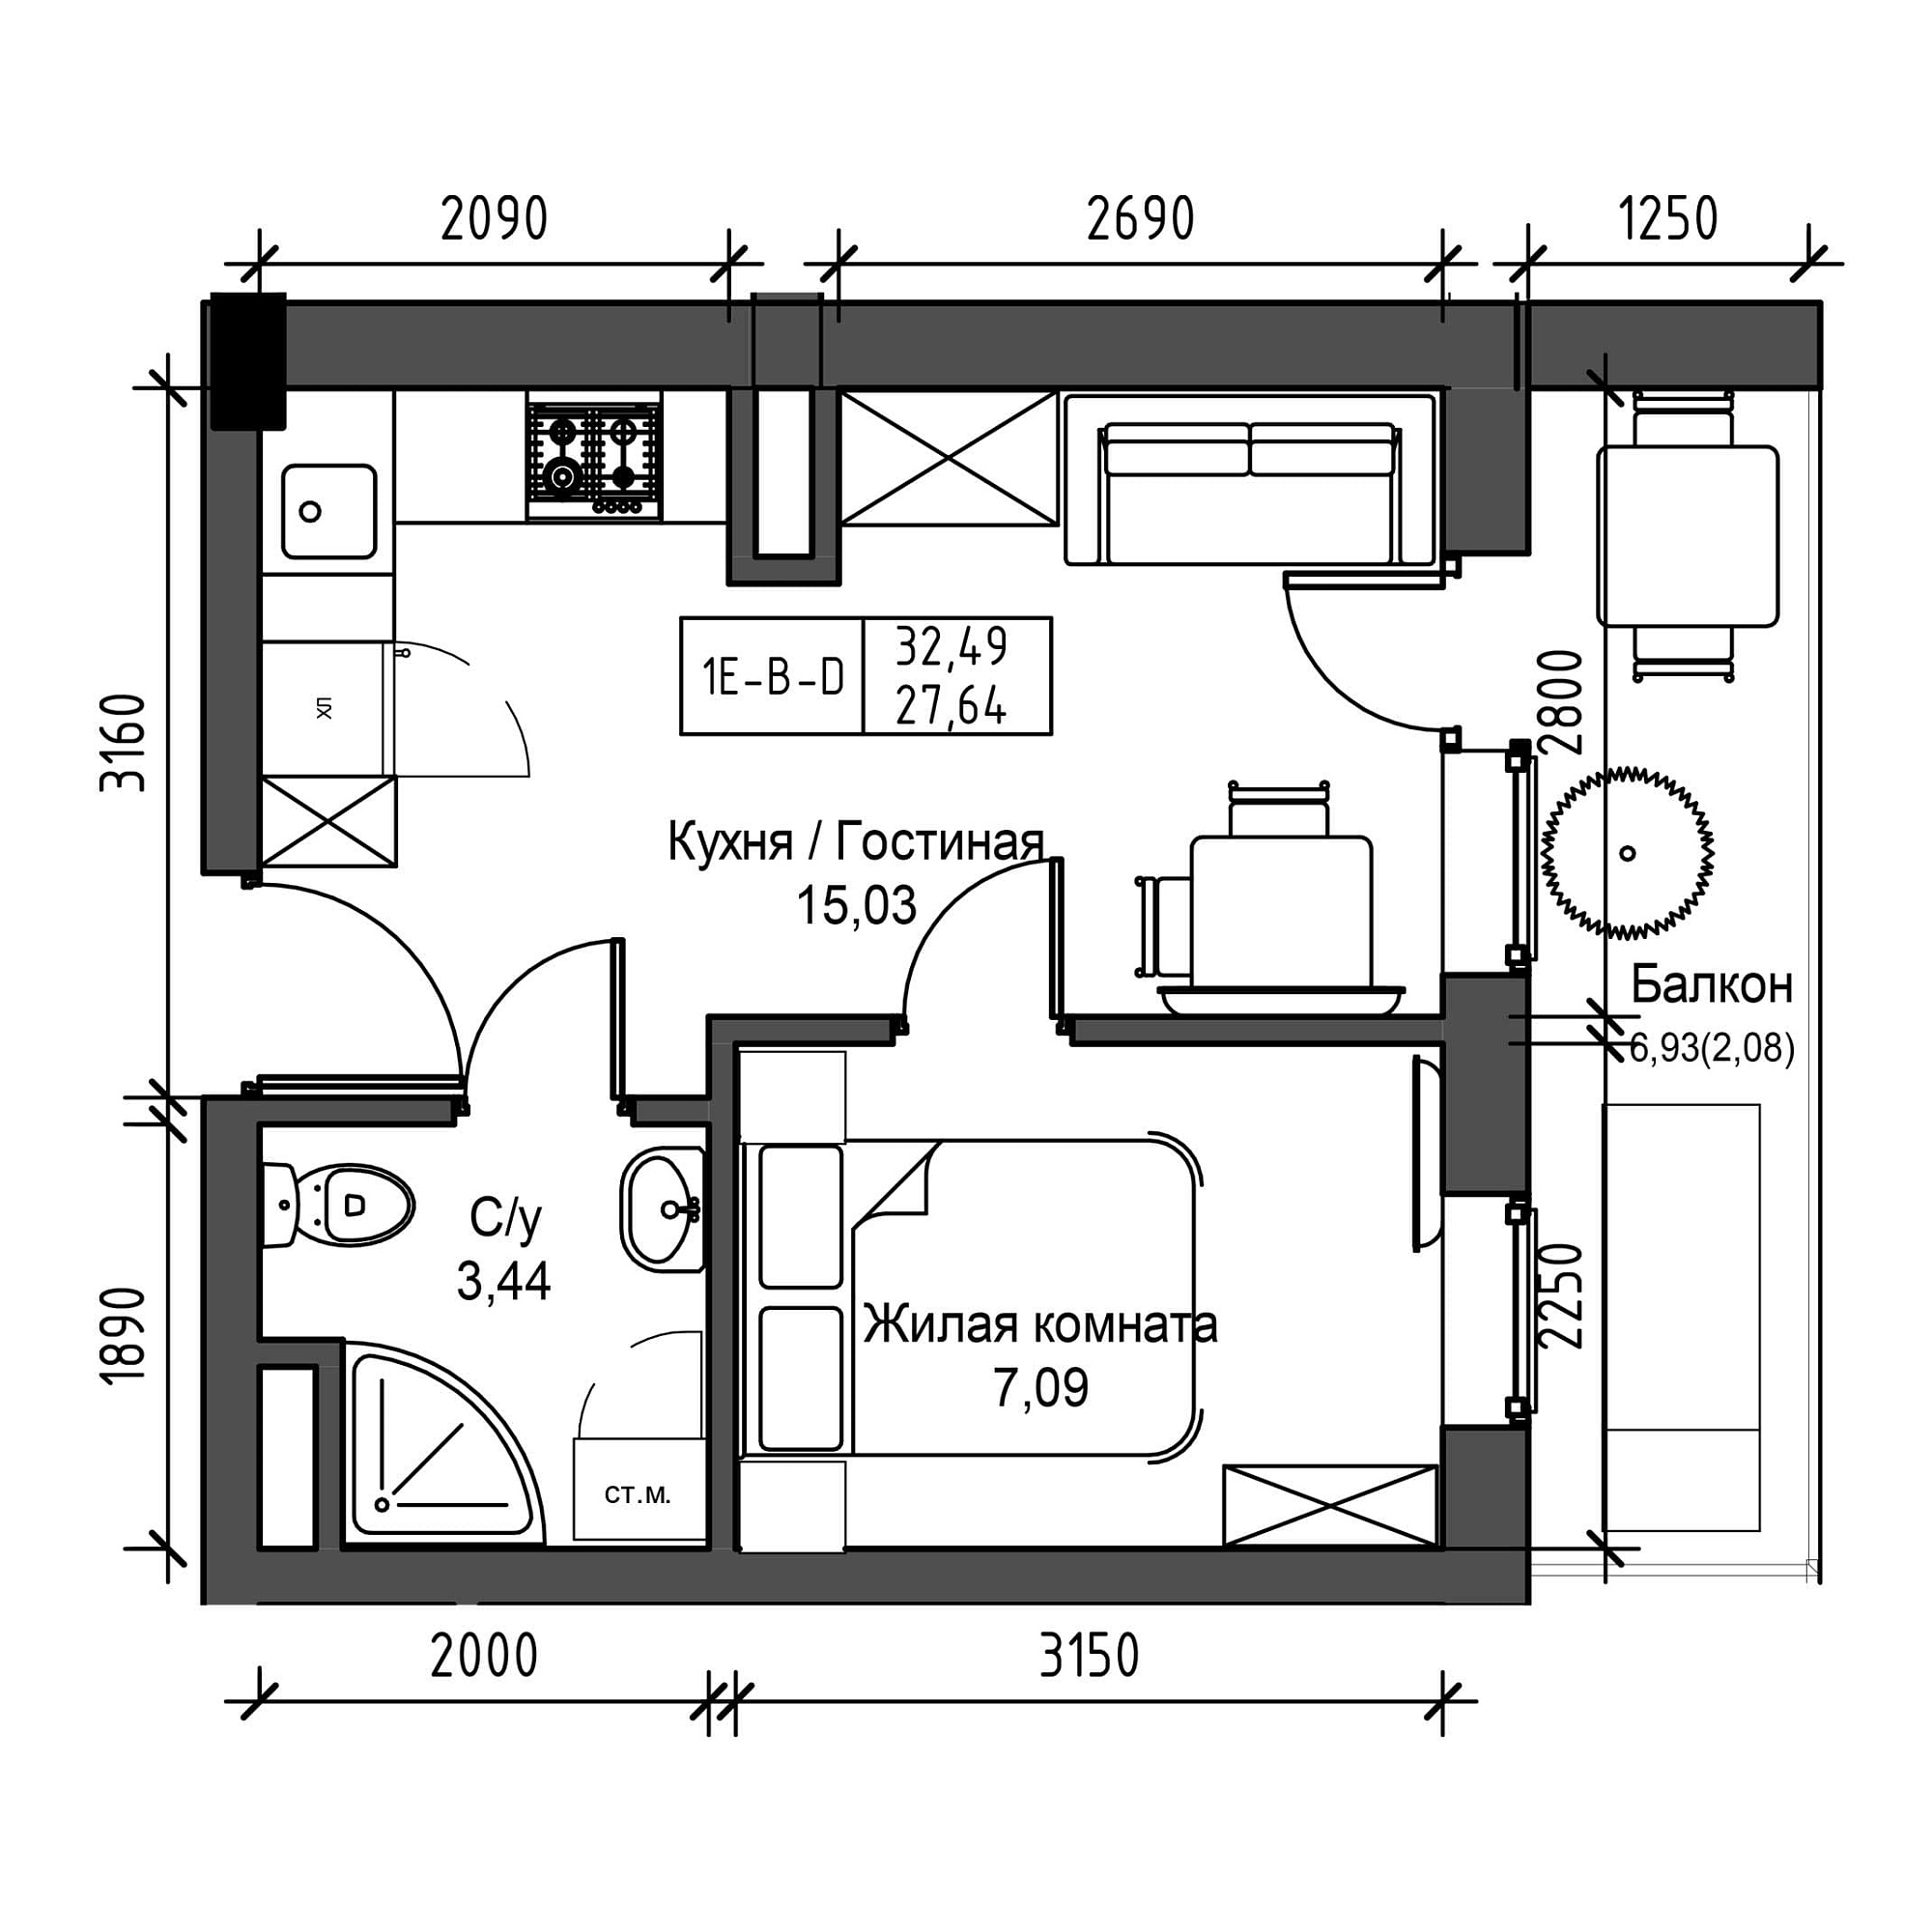 Planning 1-rm flats area 27.64m2, UM-001-07/0001.